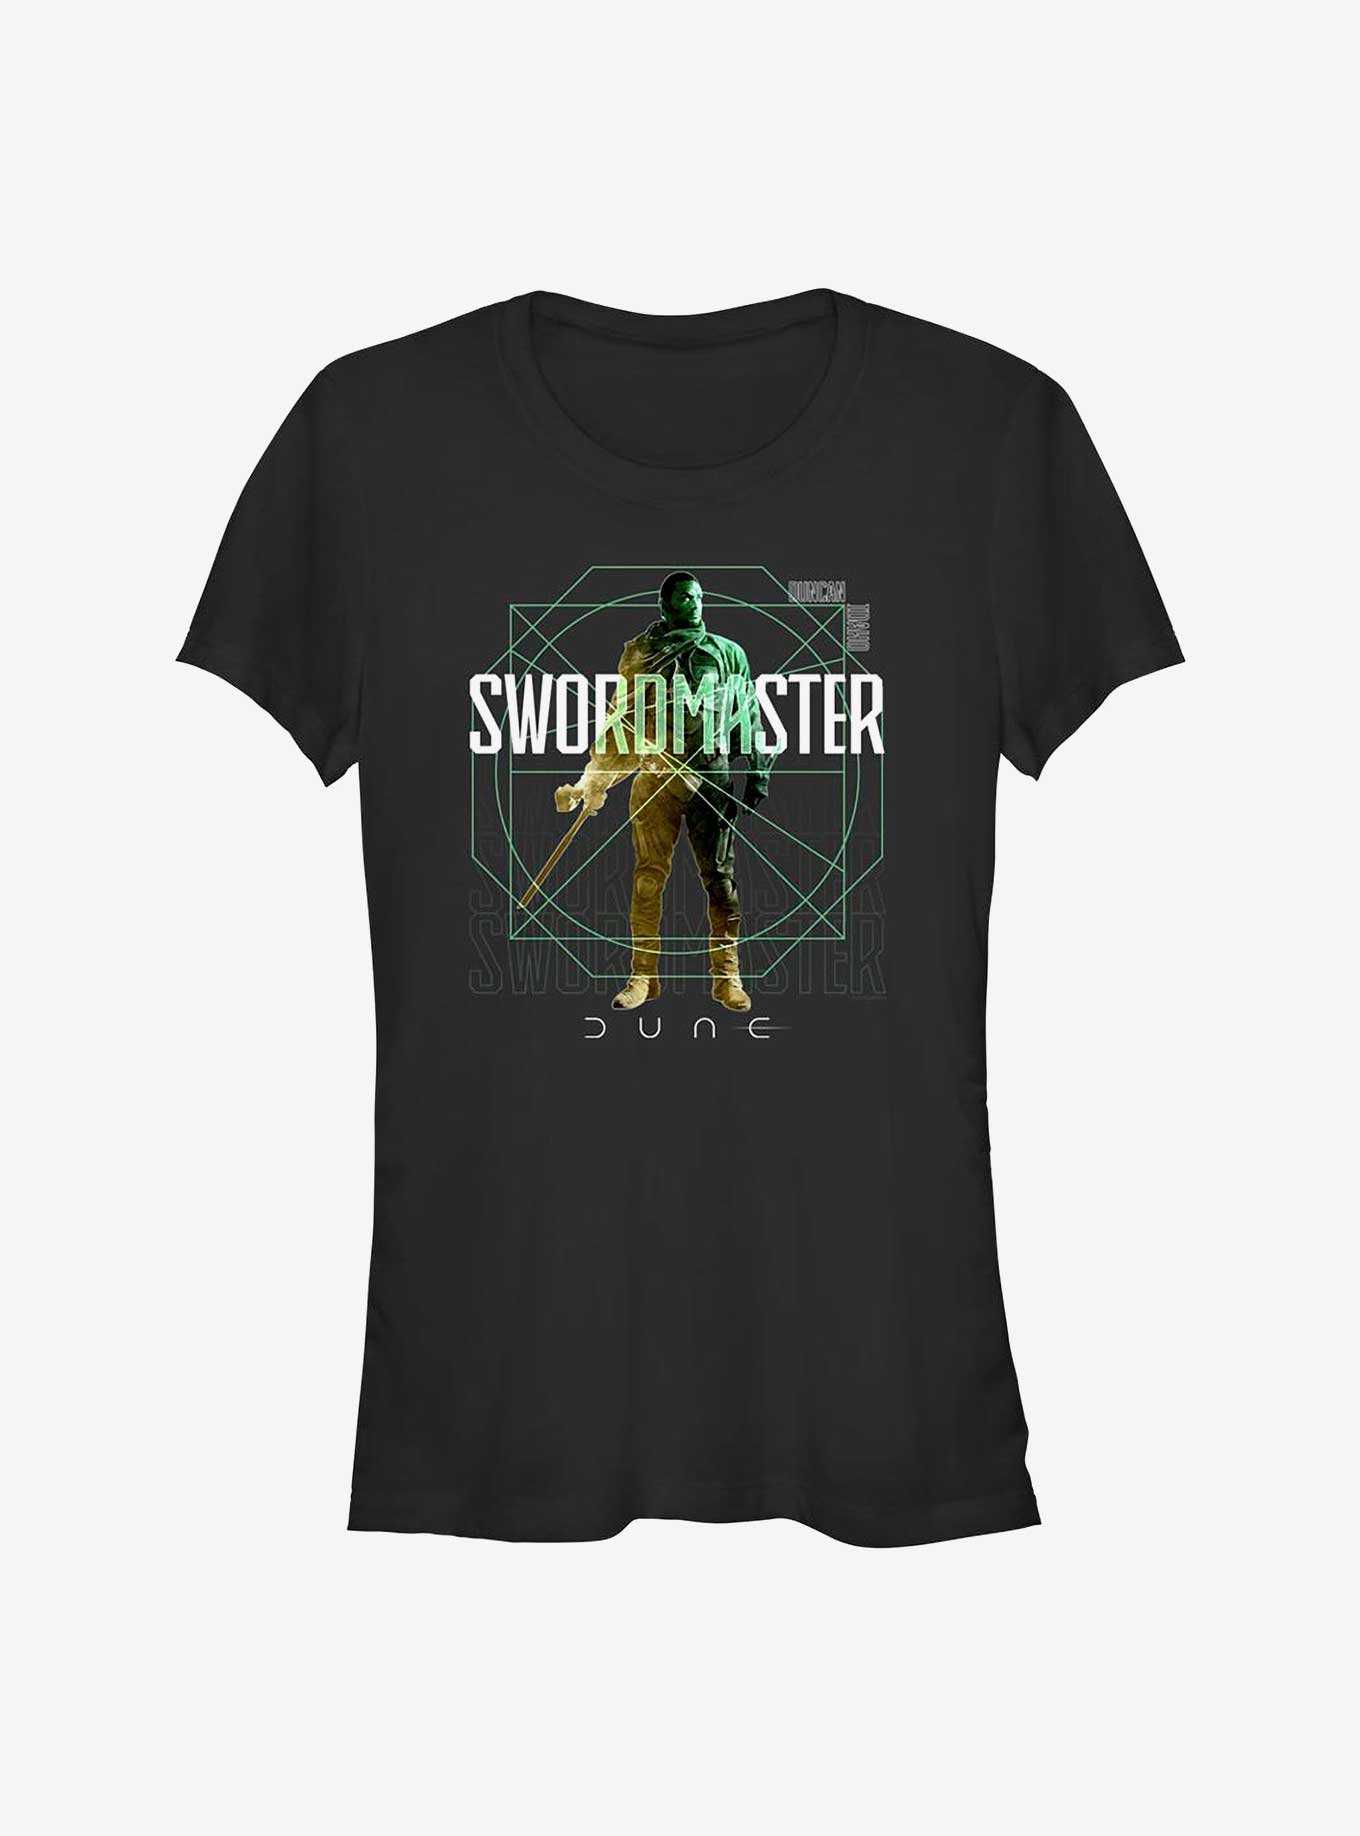 Dune Duncan Idaho Sword Master Girls T-Shirt, , hi-res